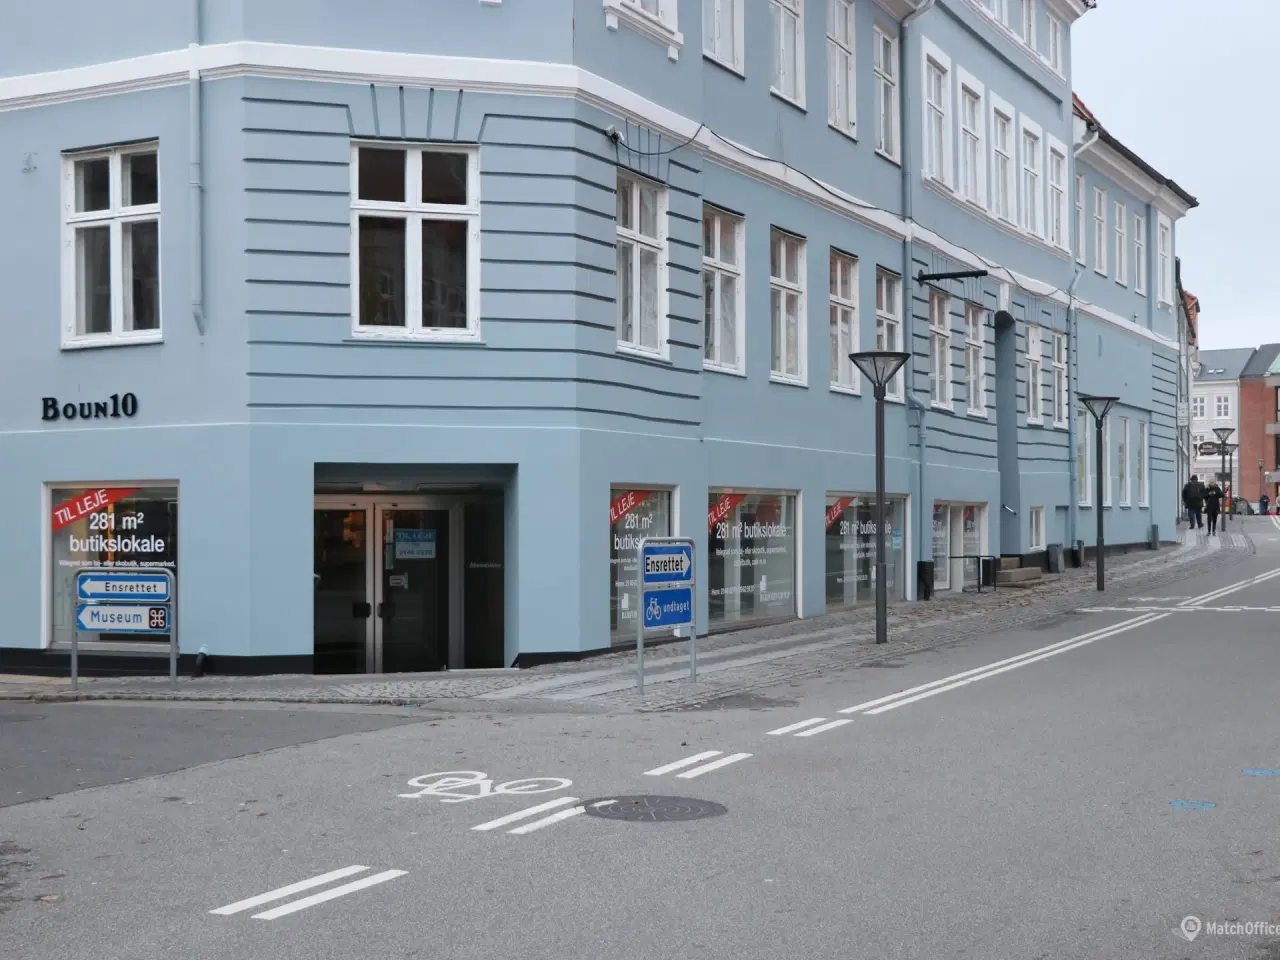 Billede 2 - 281 m² butikslokale – Korsgade – Nyborg